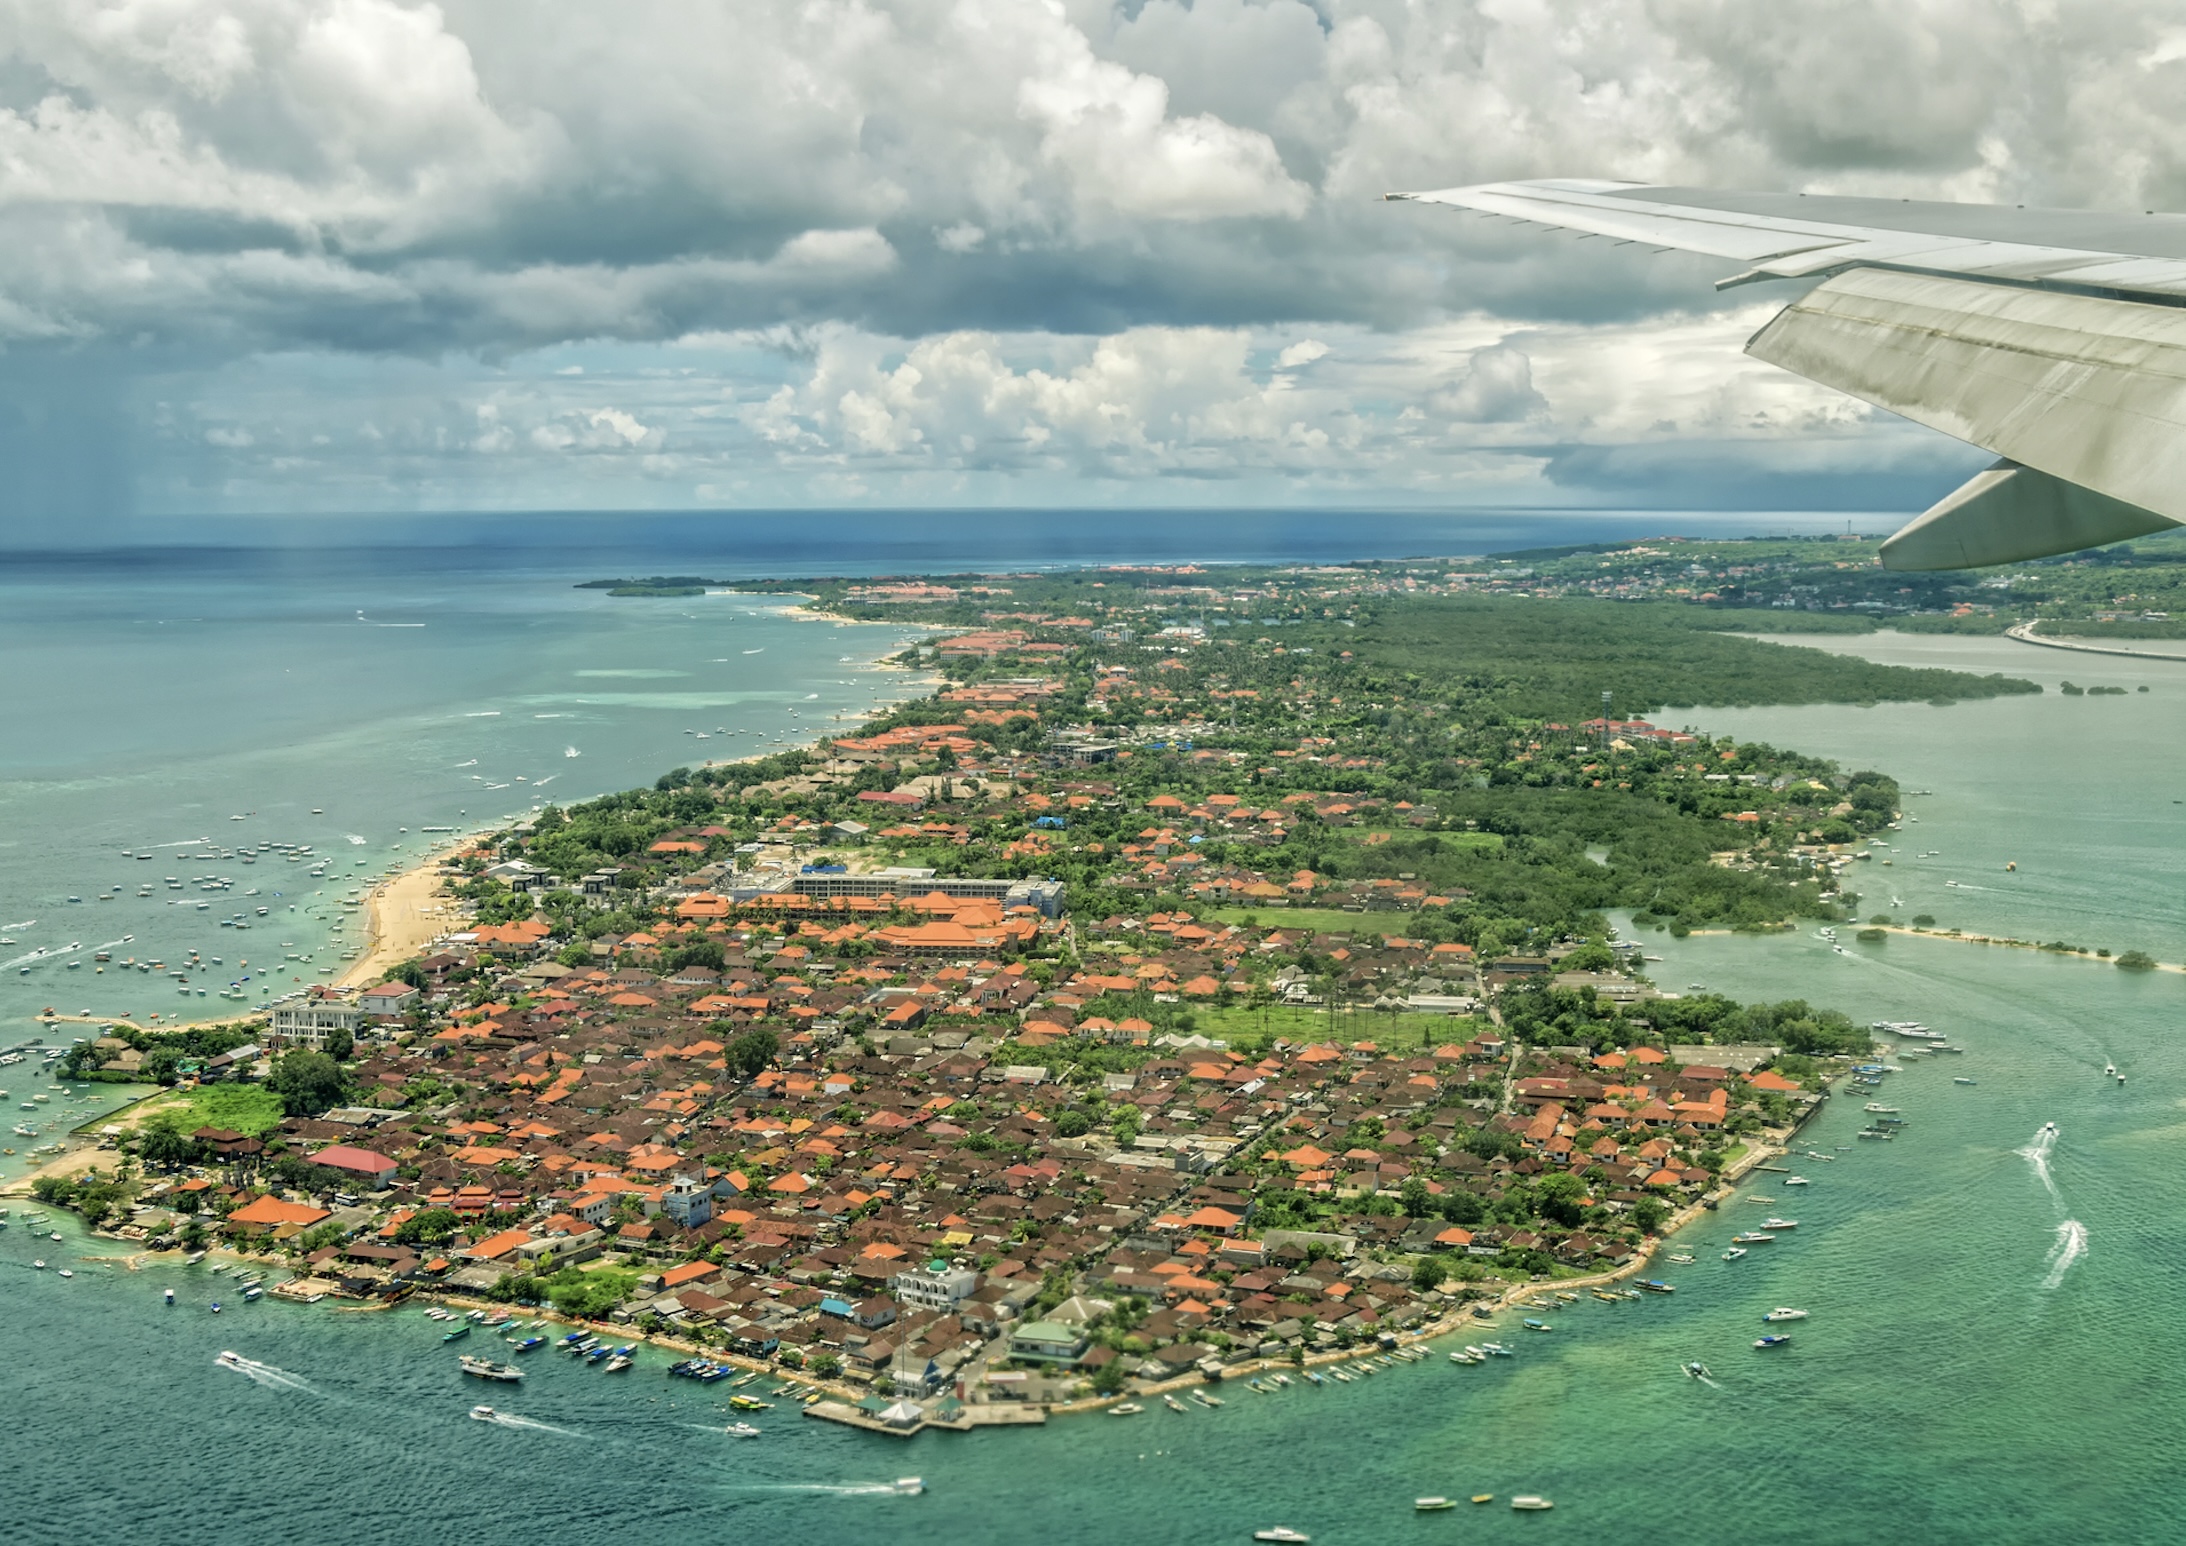 Private Jet Rental Services Soar Amidst Partial Lockdown In Bali